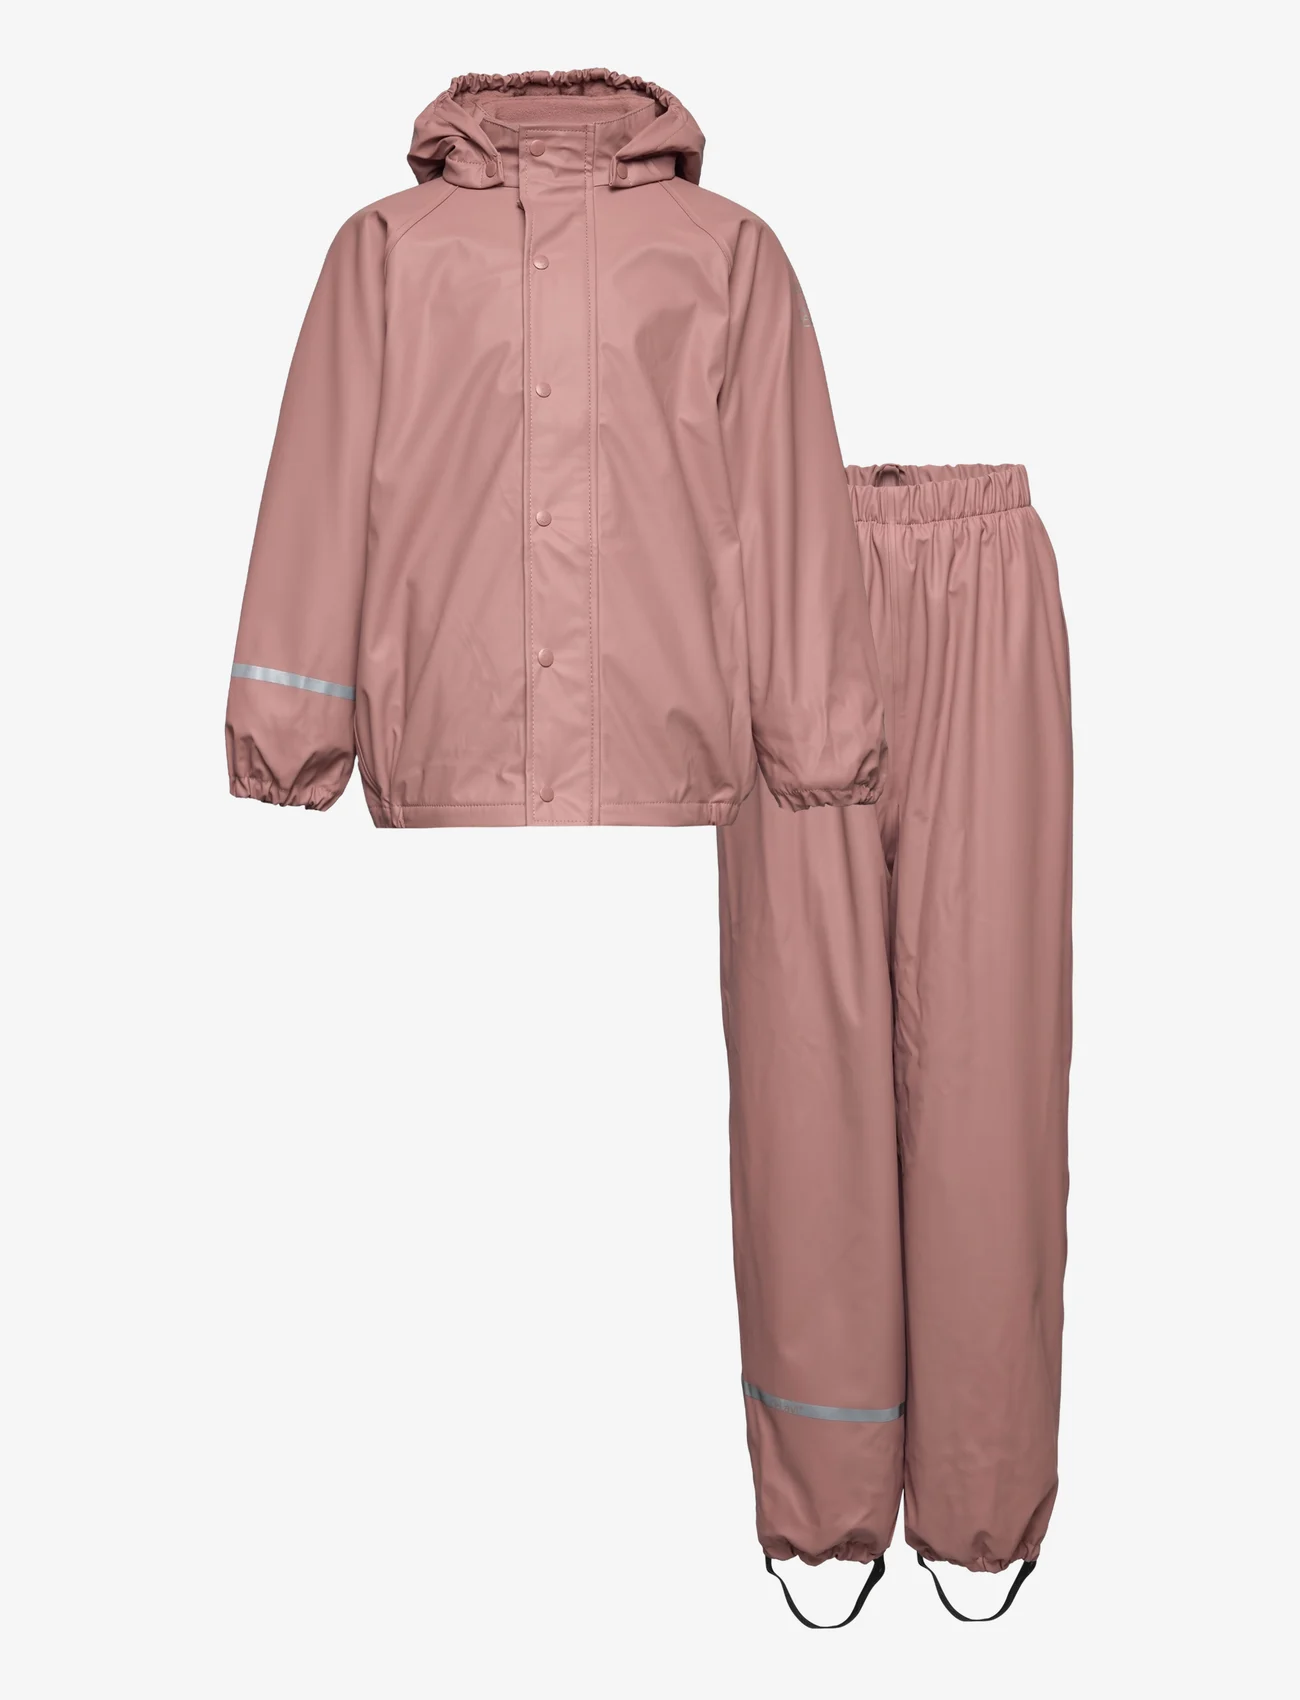 CeLaVi - Rainwear Set -Solid, w.fleece - talvekombinesoon - burlwood - 0